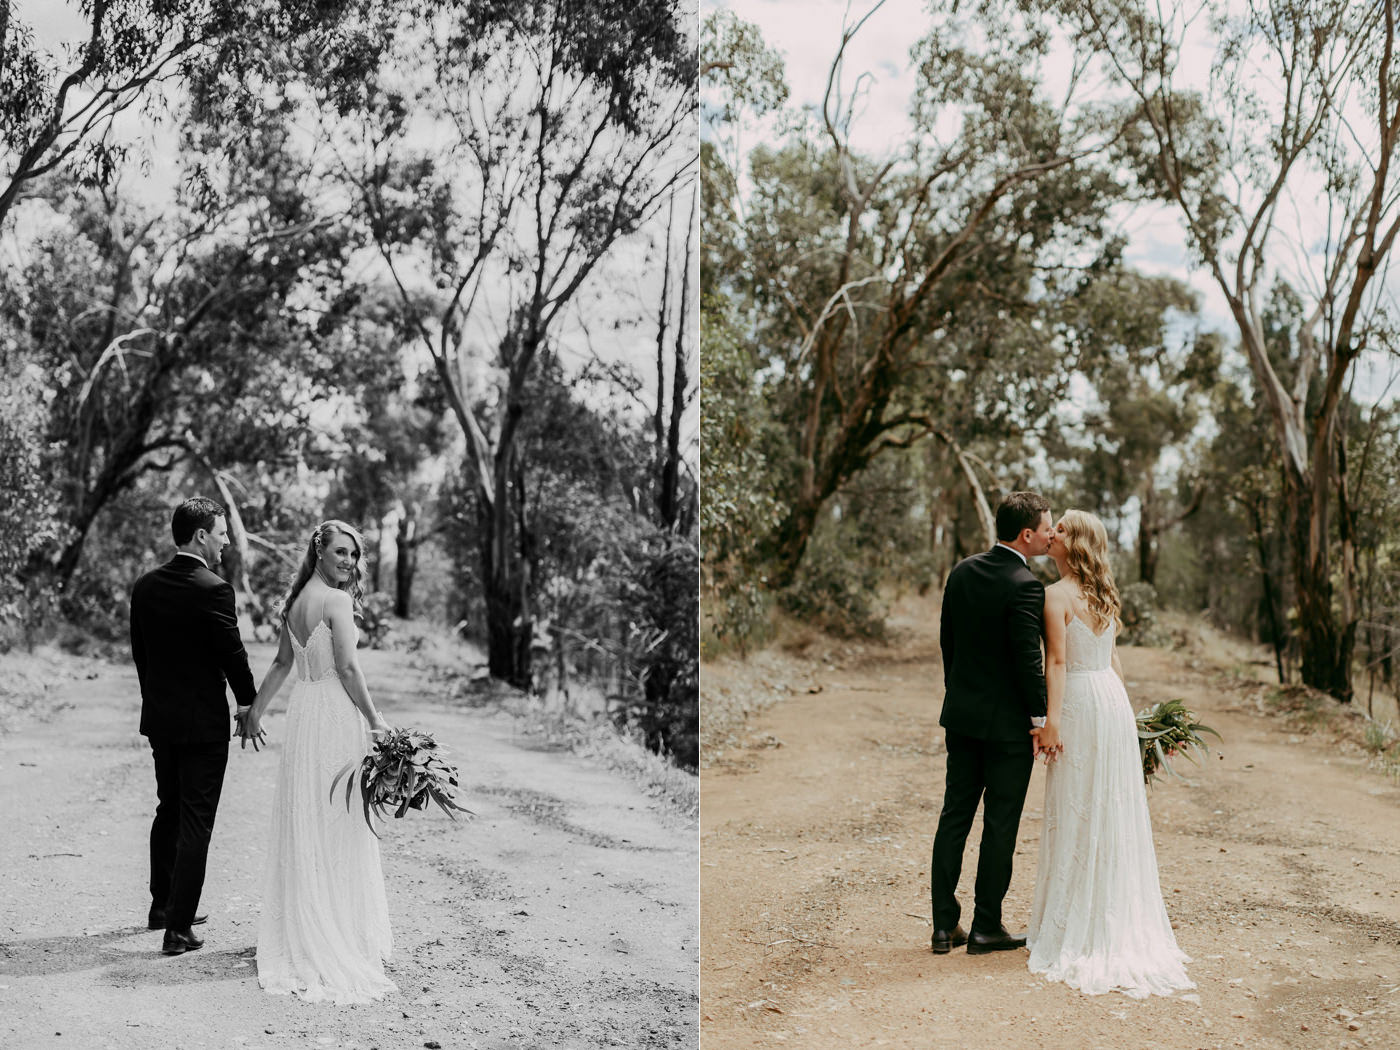 Anthony & Eliet - Wagga Wagga Wedding - Country NSW - Samantha Heather Photography-56.jpg